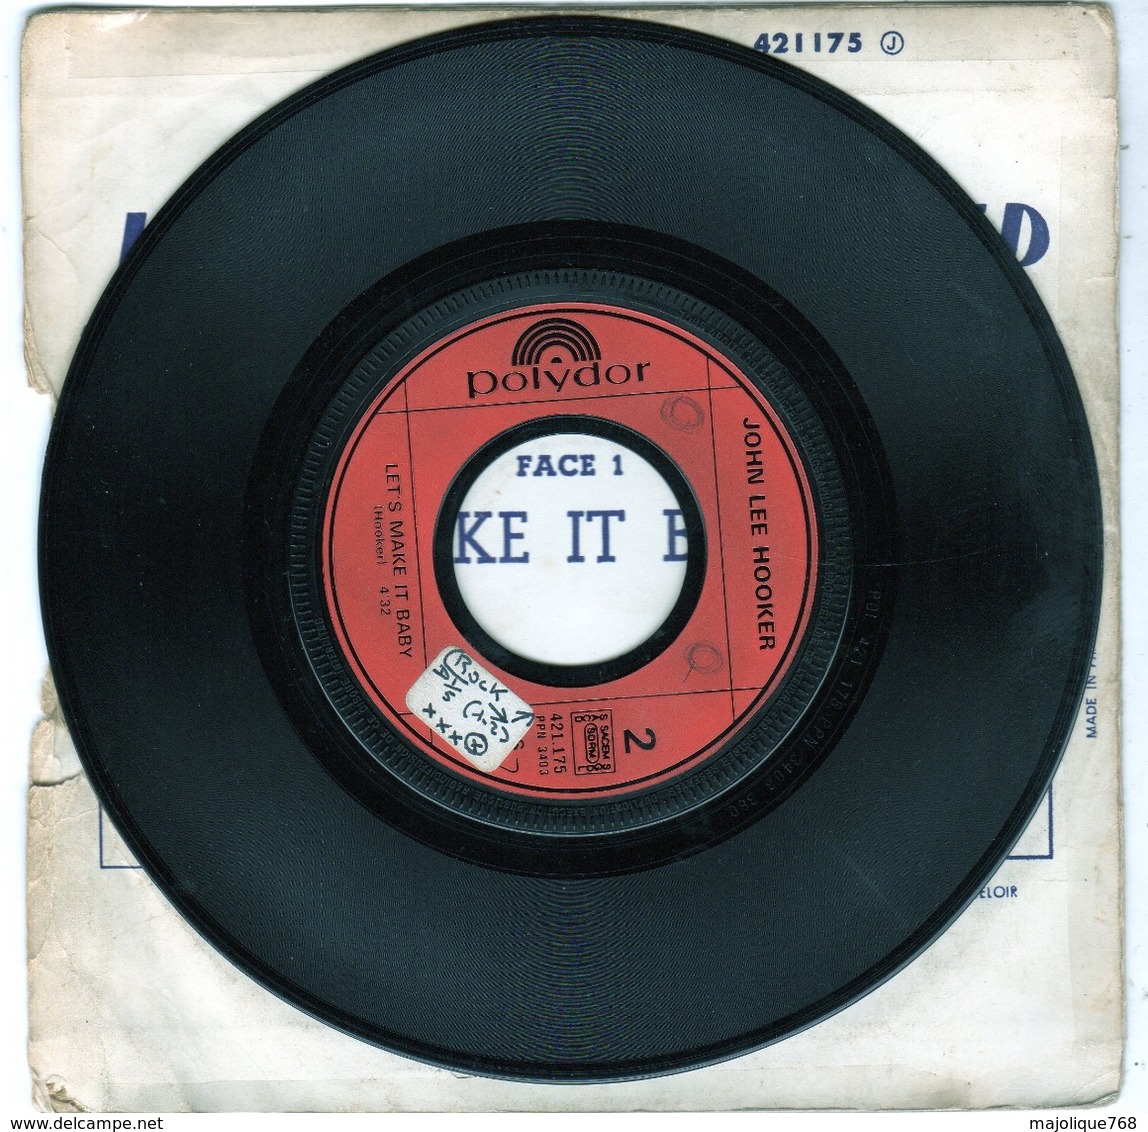 John Lee Hooker - Shake It Baby - Let's Make It Baby - Polydor 421175 - 1968 - - Blues